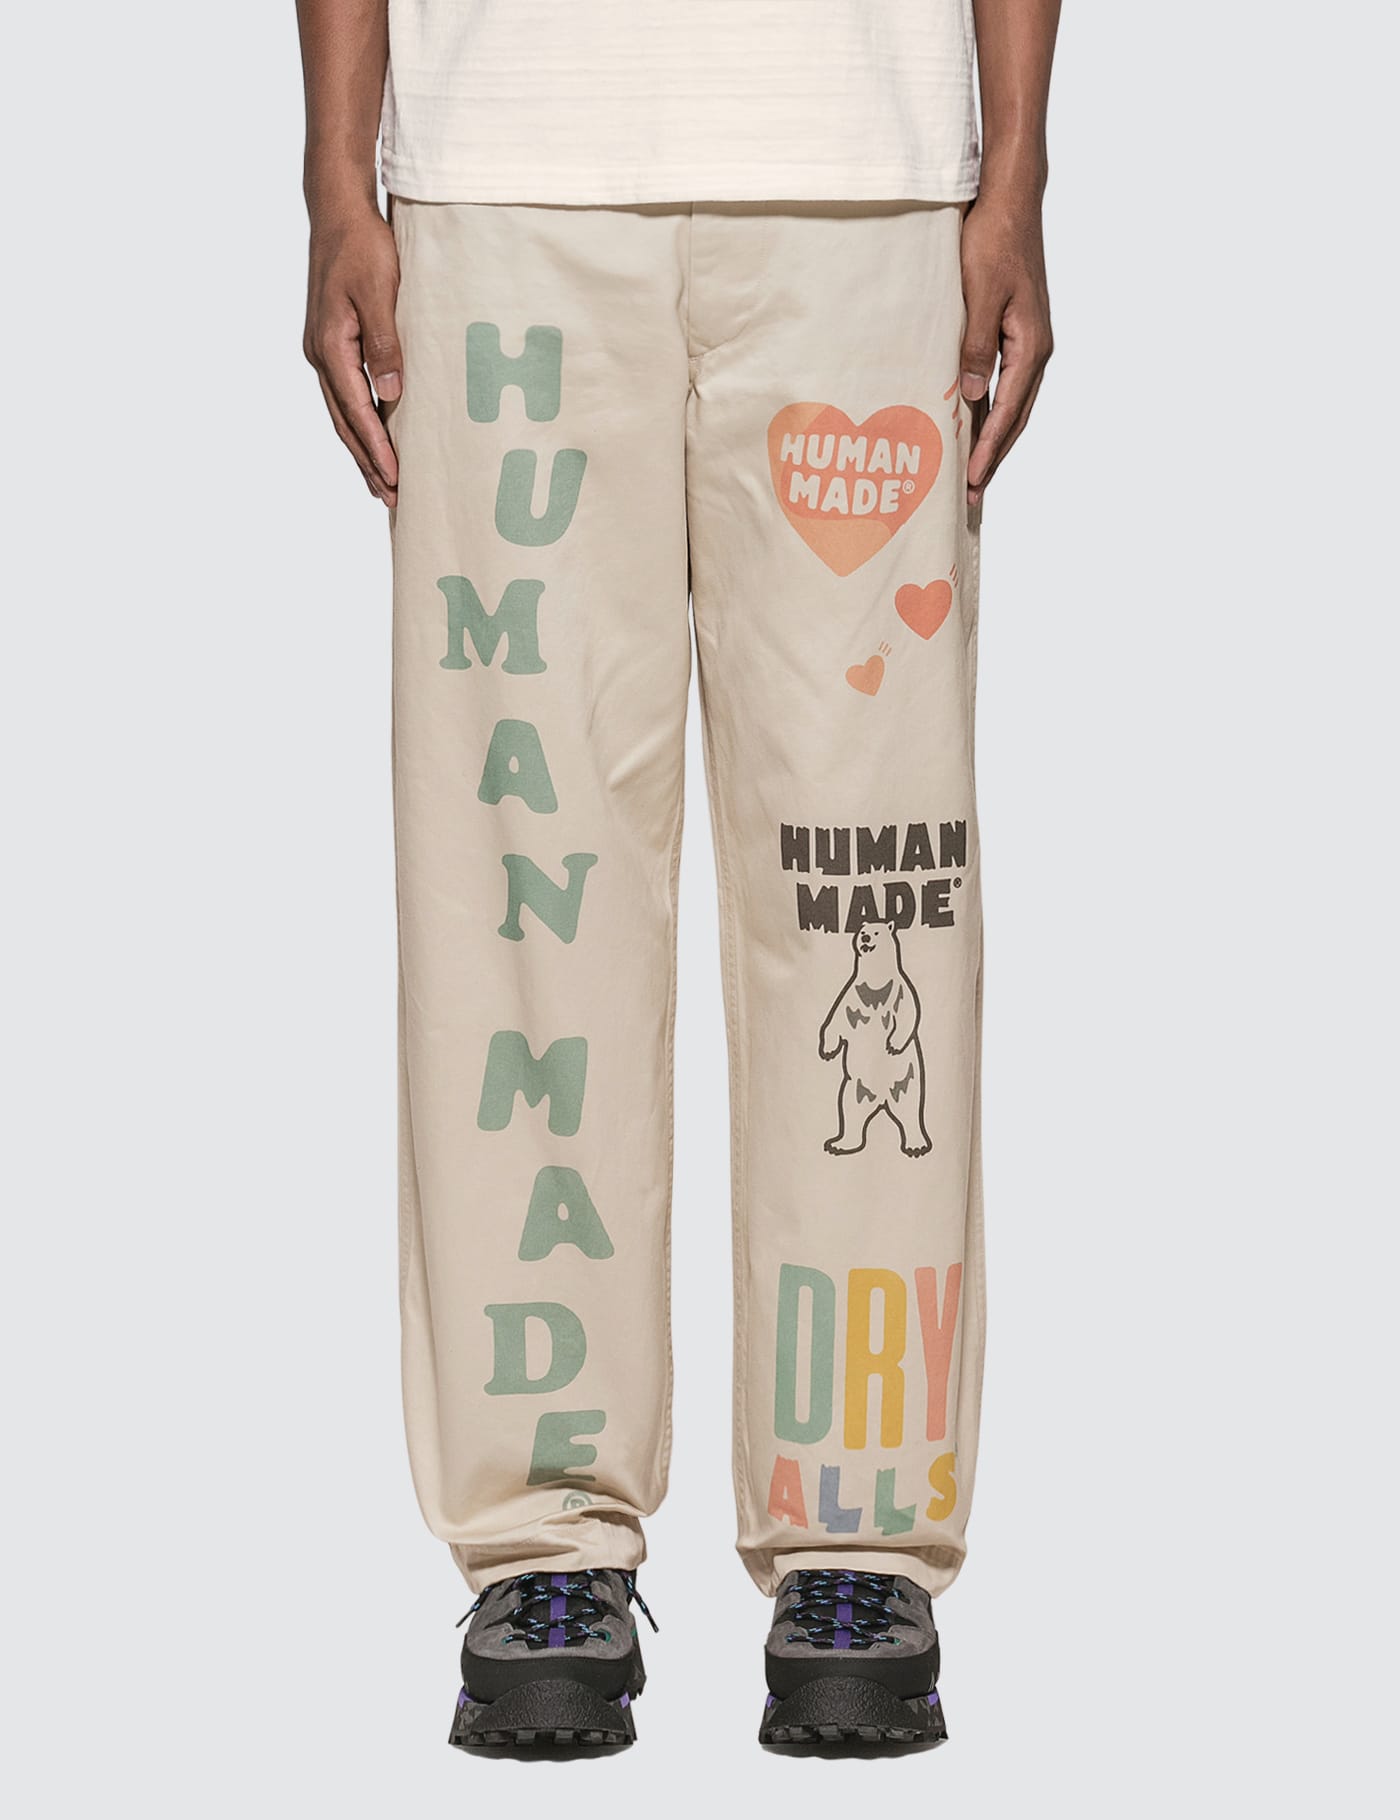 Human Made - Military Print Chino Pants | HBX - Globally Curated